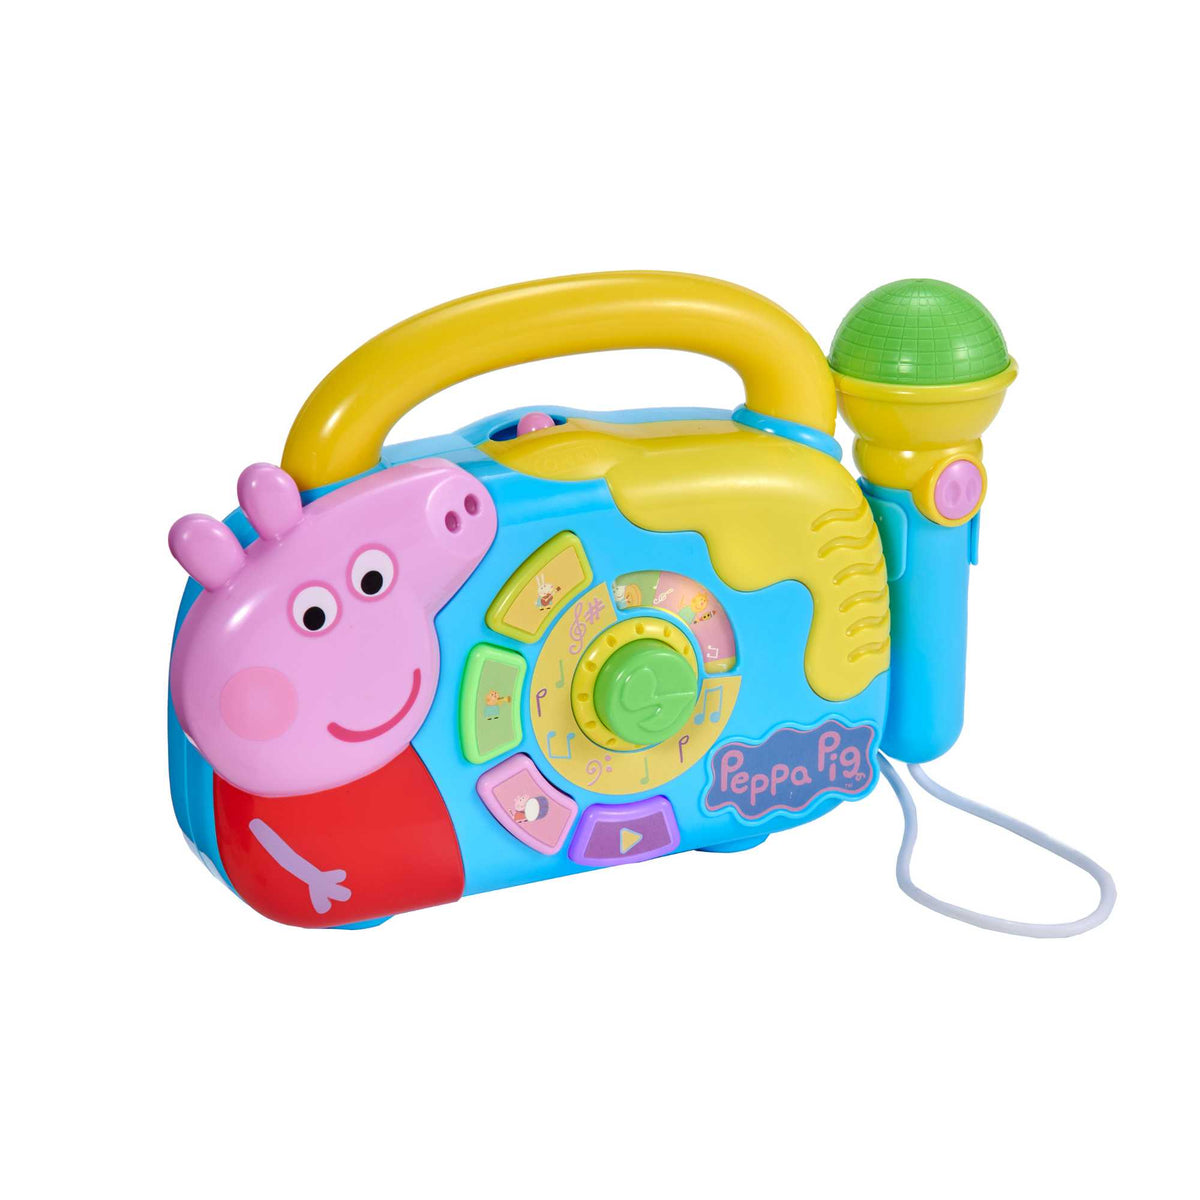 Peppa Pig Boom Box with Microphone